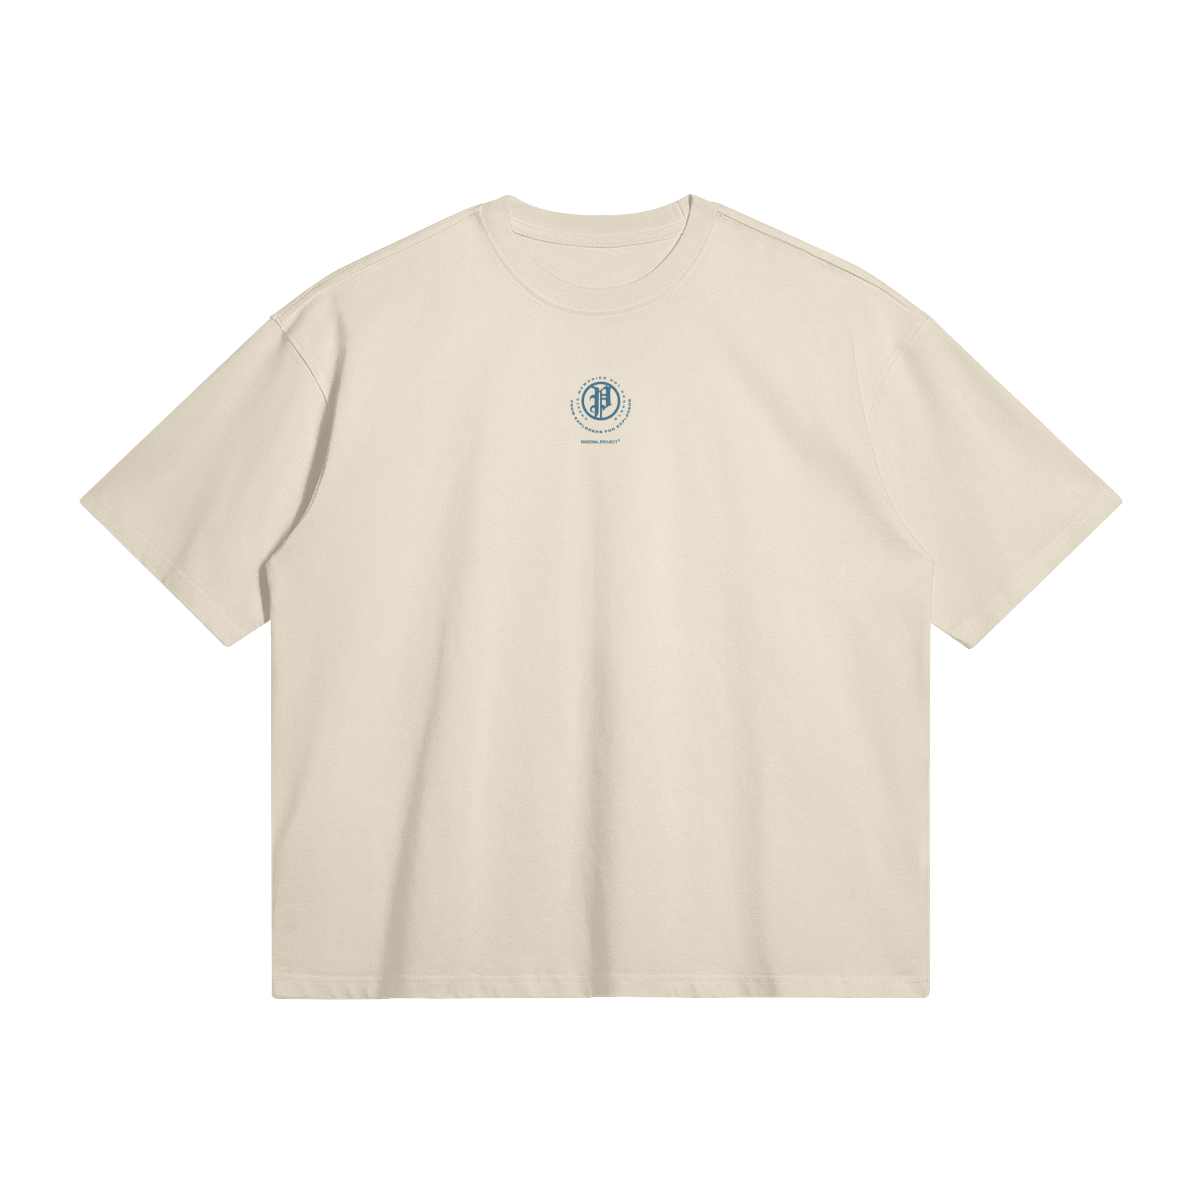 explorer shirt - navy logo